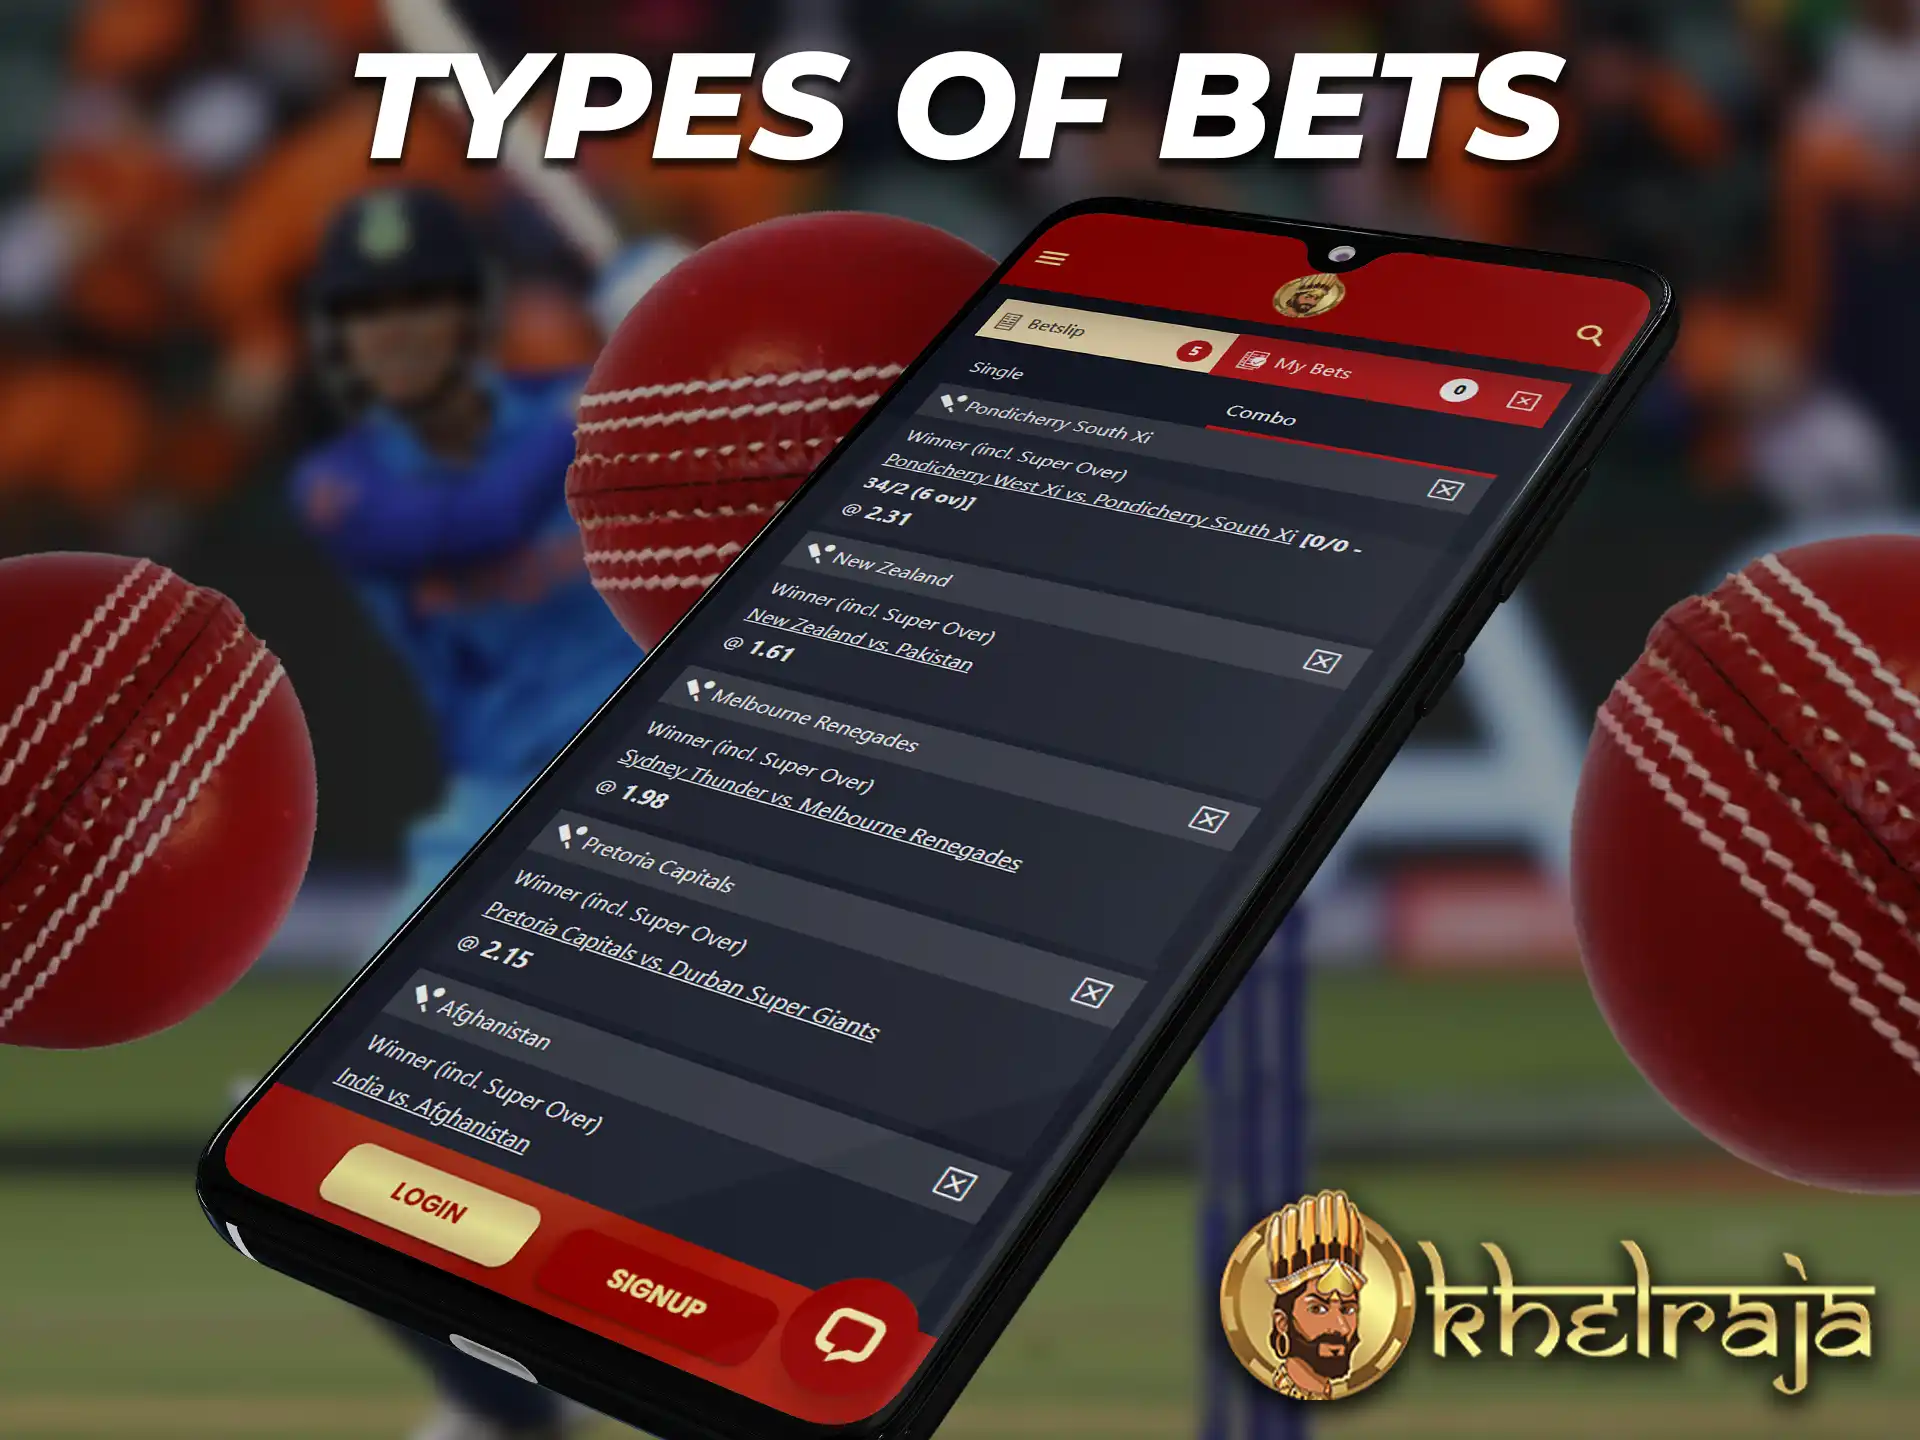 Khelraja app has three types of bets single, combo and system.